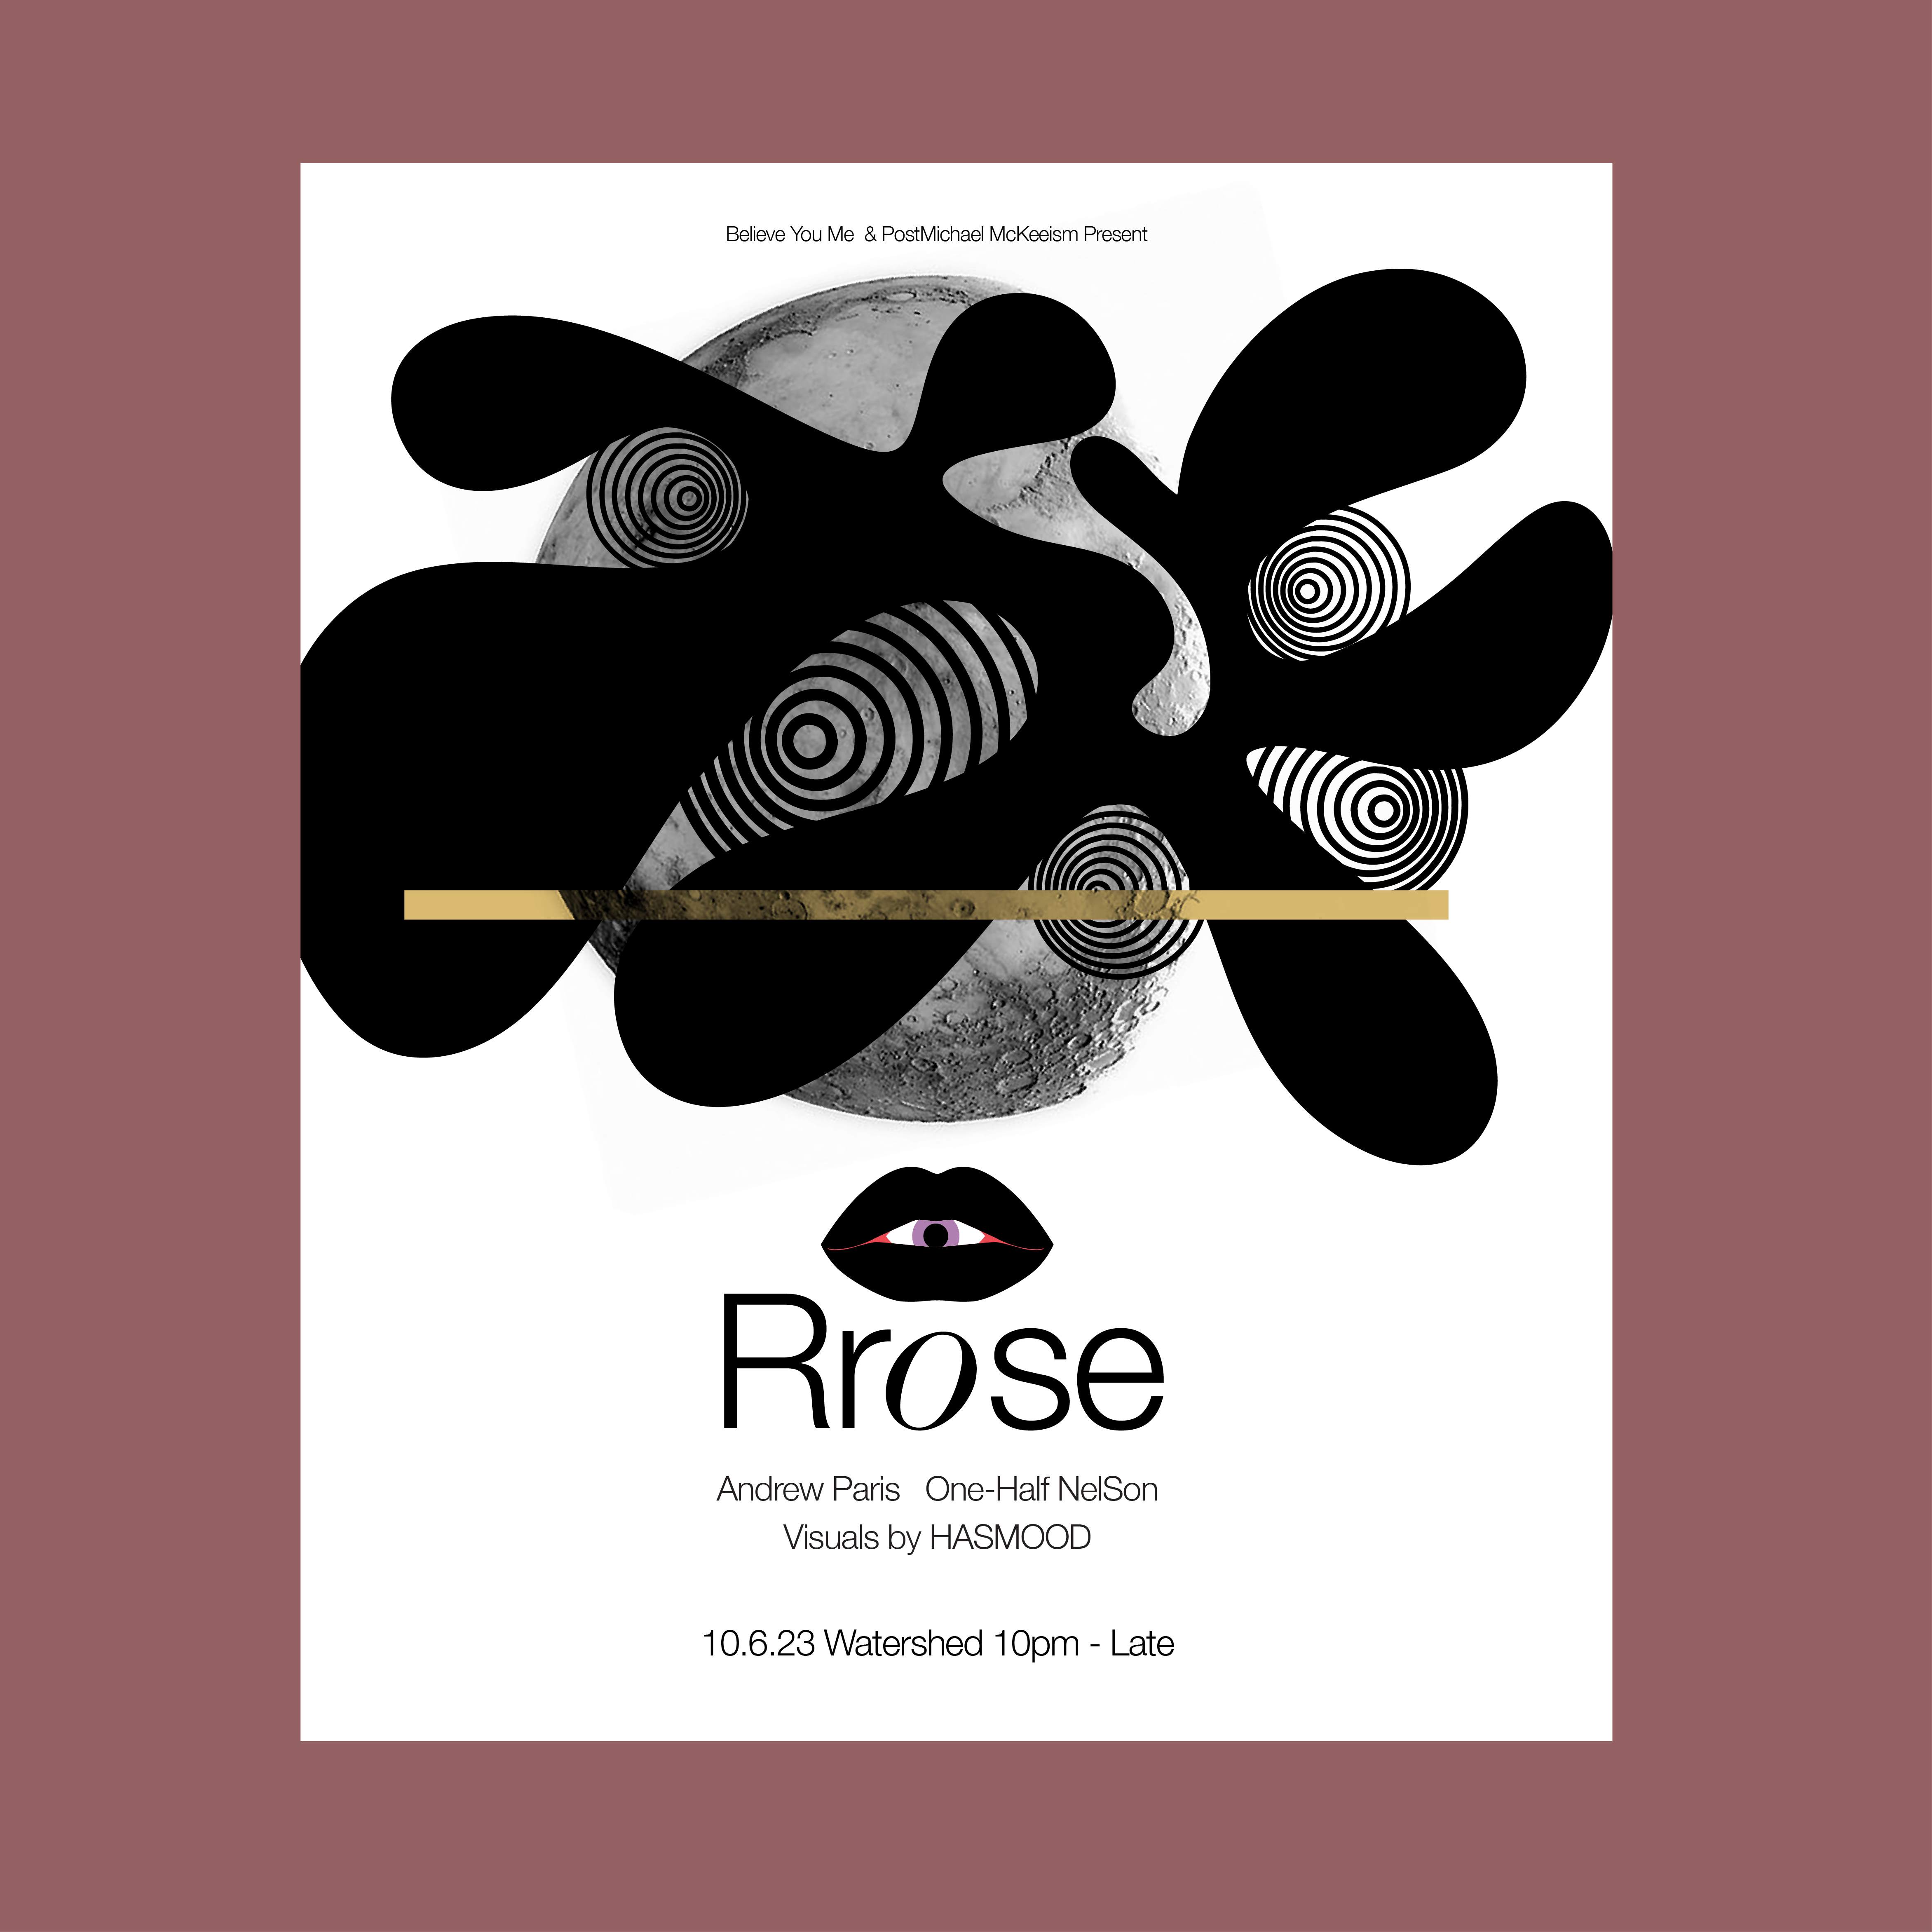 Believe You Me & PostMichael Mckeeism present: Rrose - Página frontal